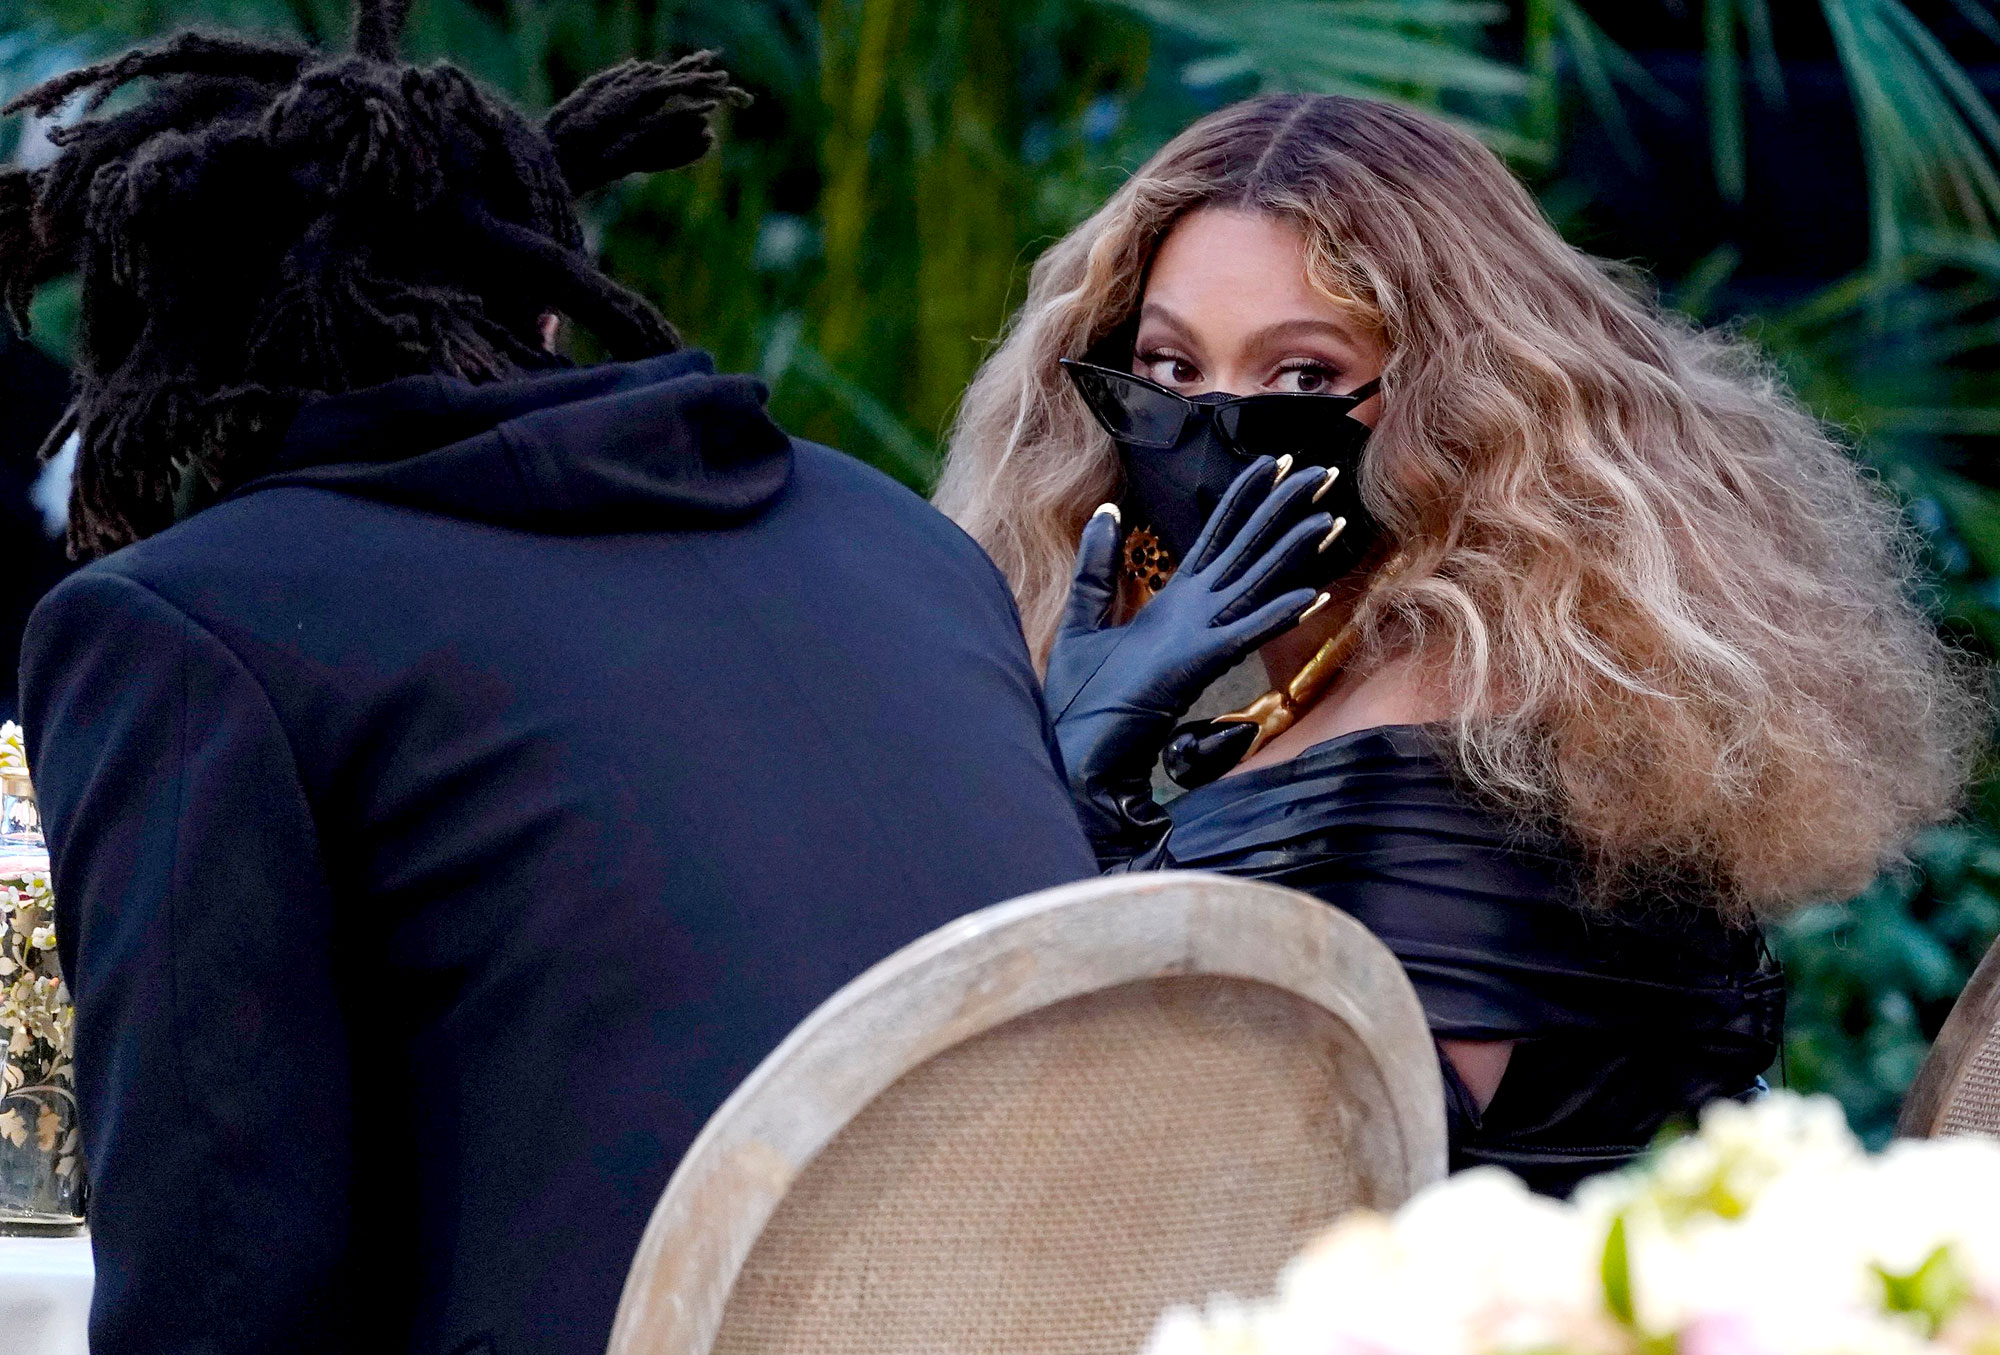 Grammys 2021: Beyonce, Jay-Z Match at Awards Show: Pics